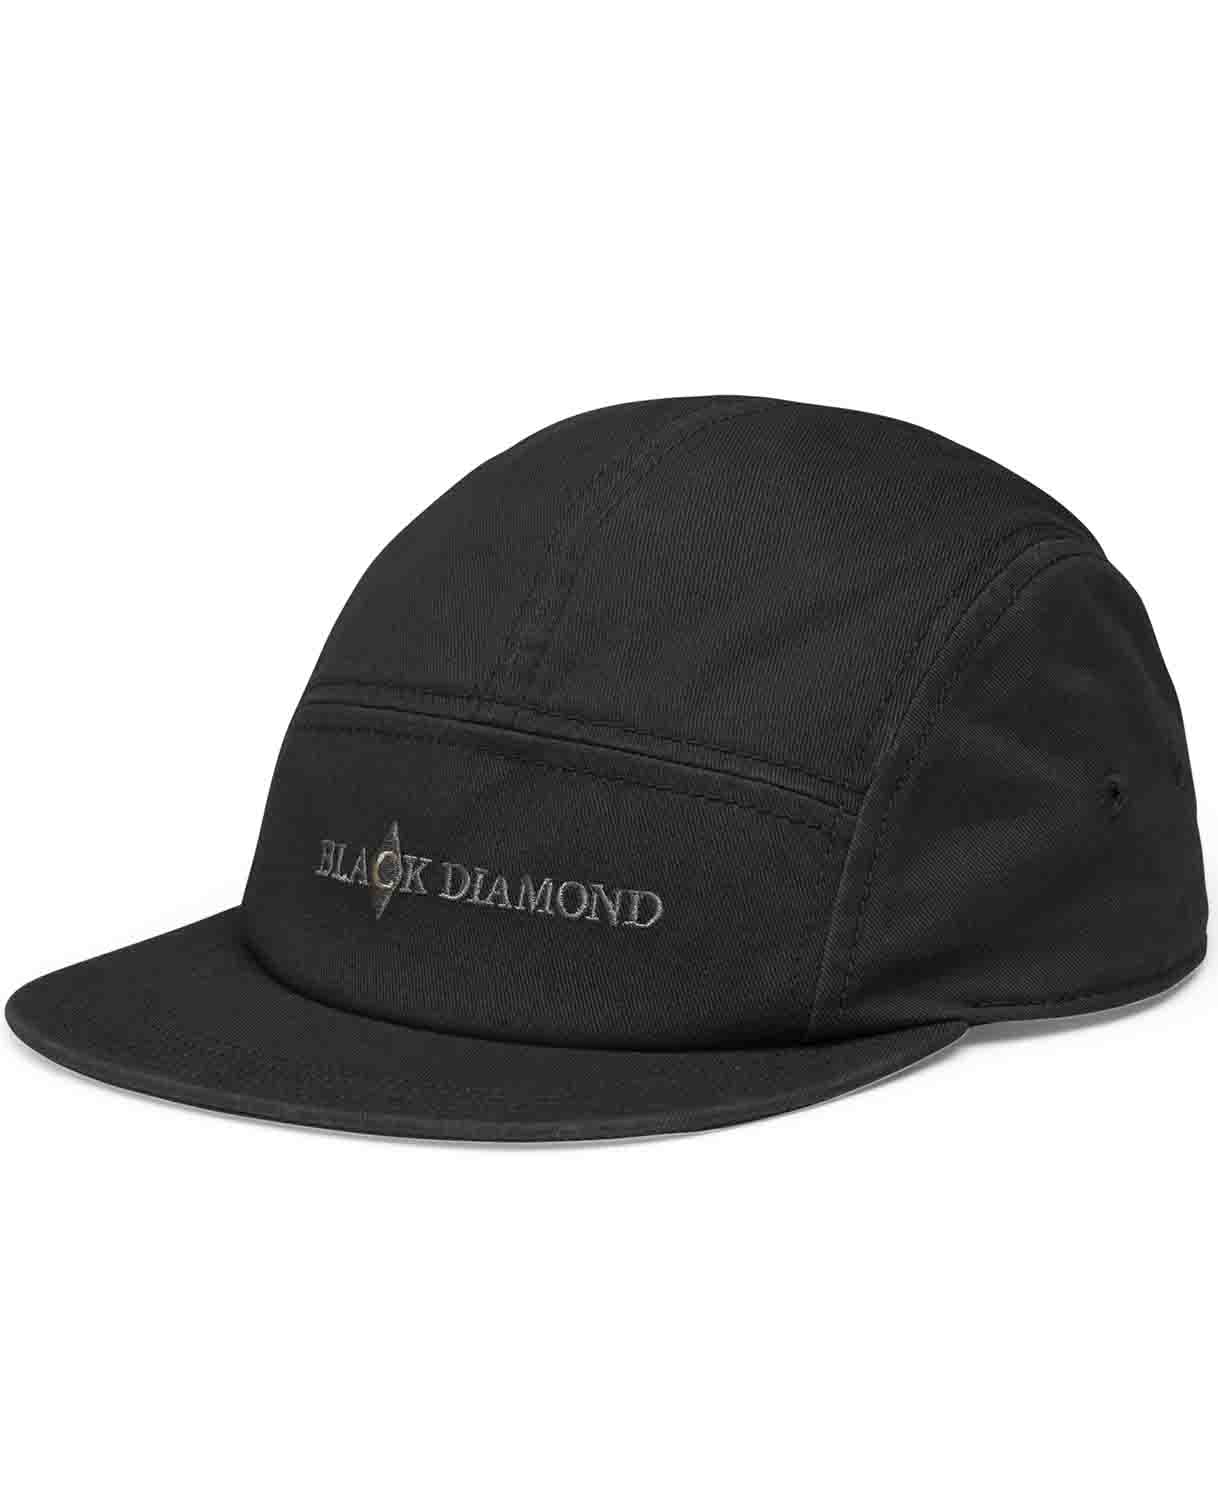 【 Black Diamond 】S24 Camper Cap 五分割帽